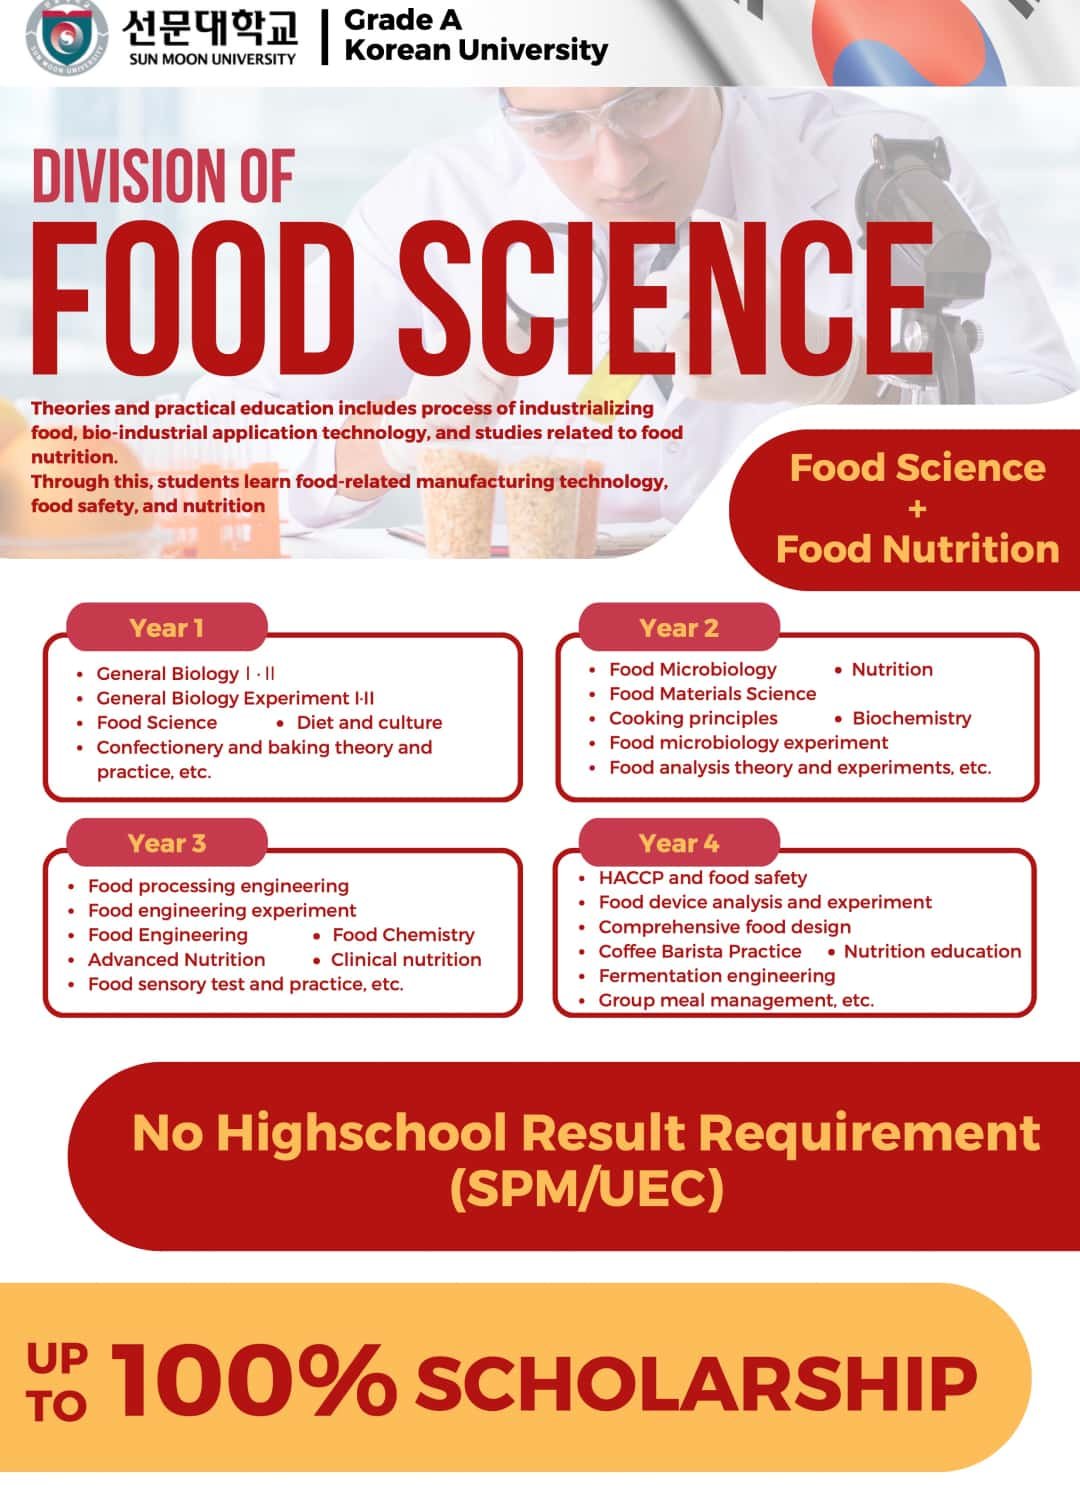  Food Science